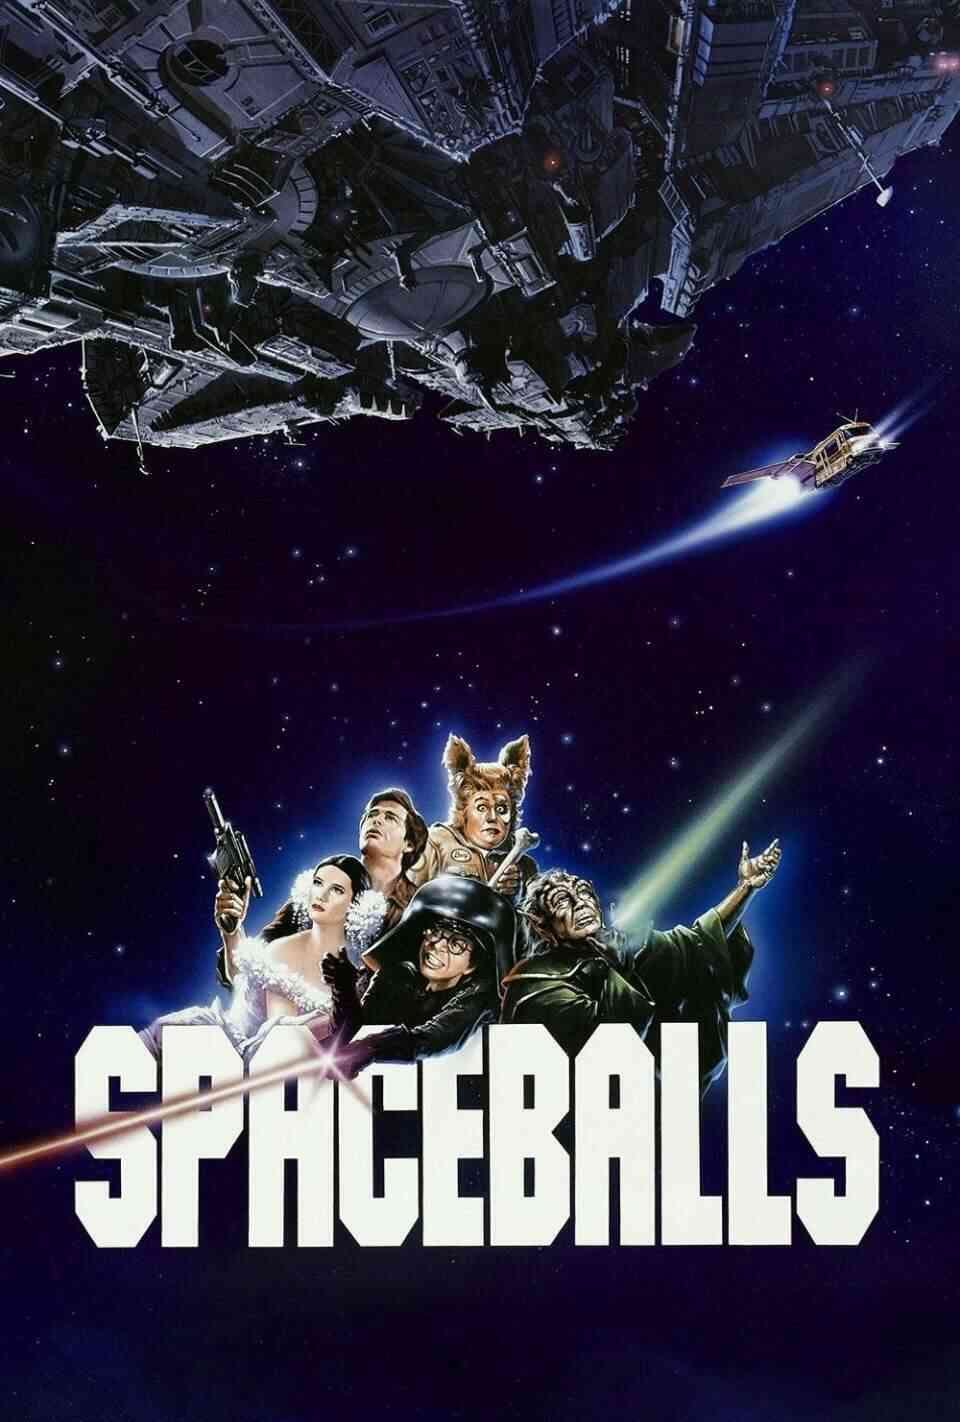 Read Spaceballs screenplay.